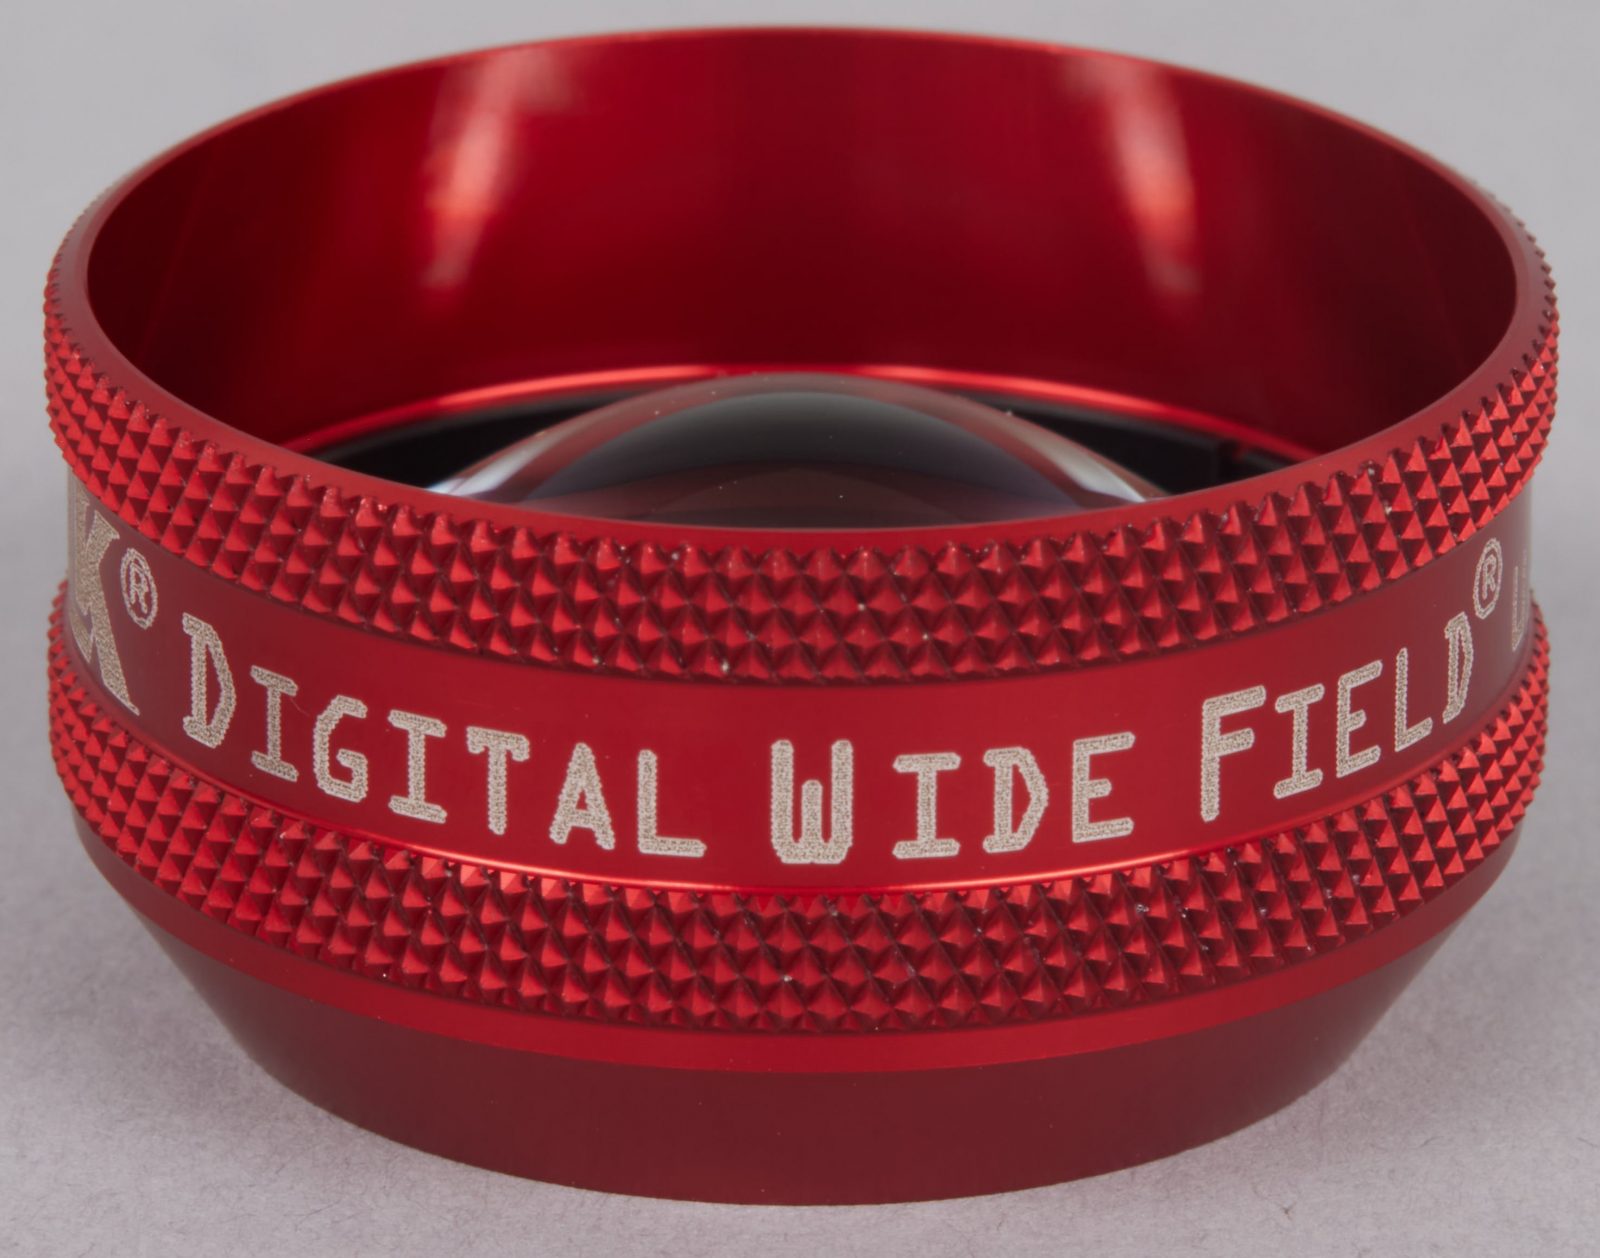 Digital Wide Field® (Red Ring)